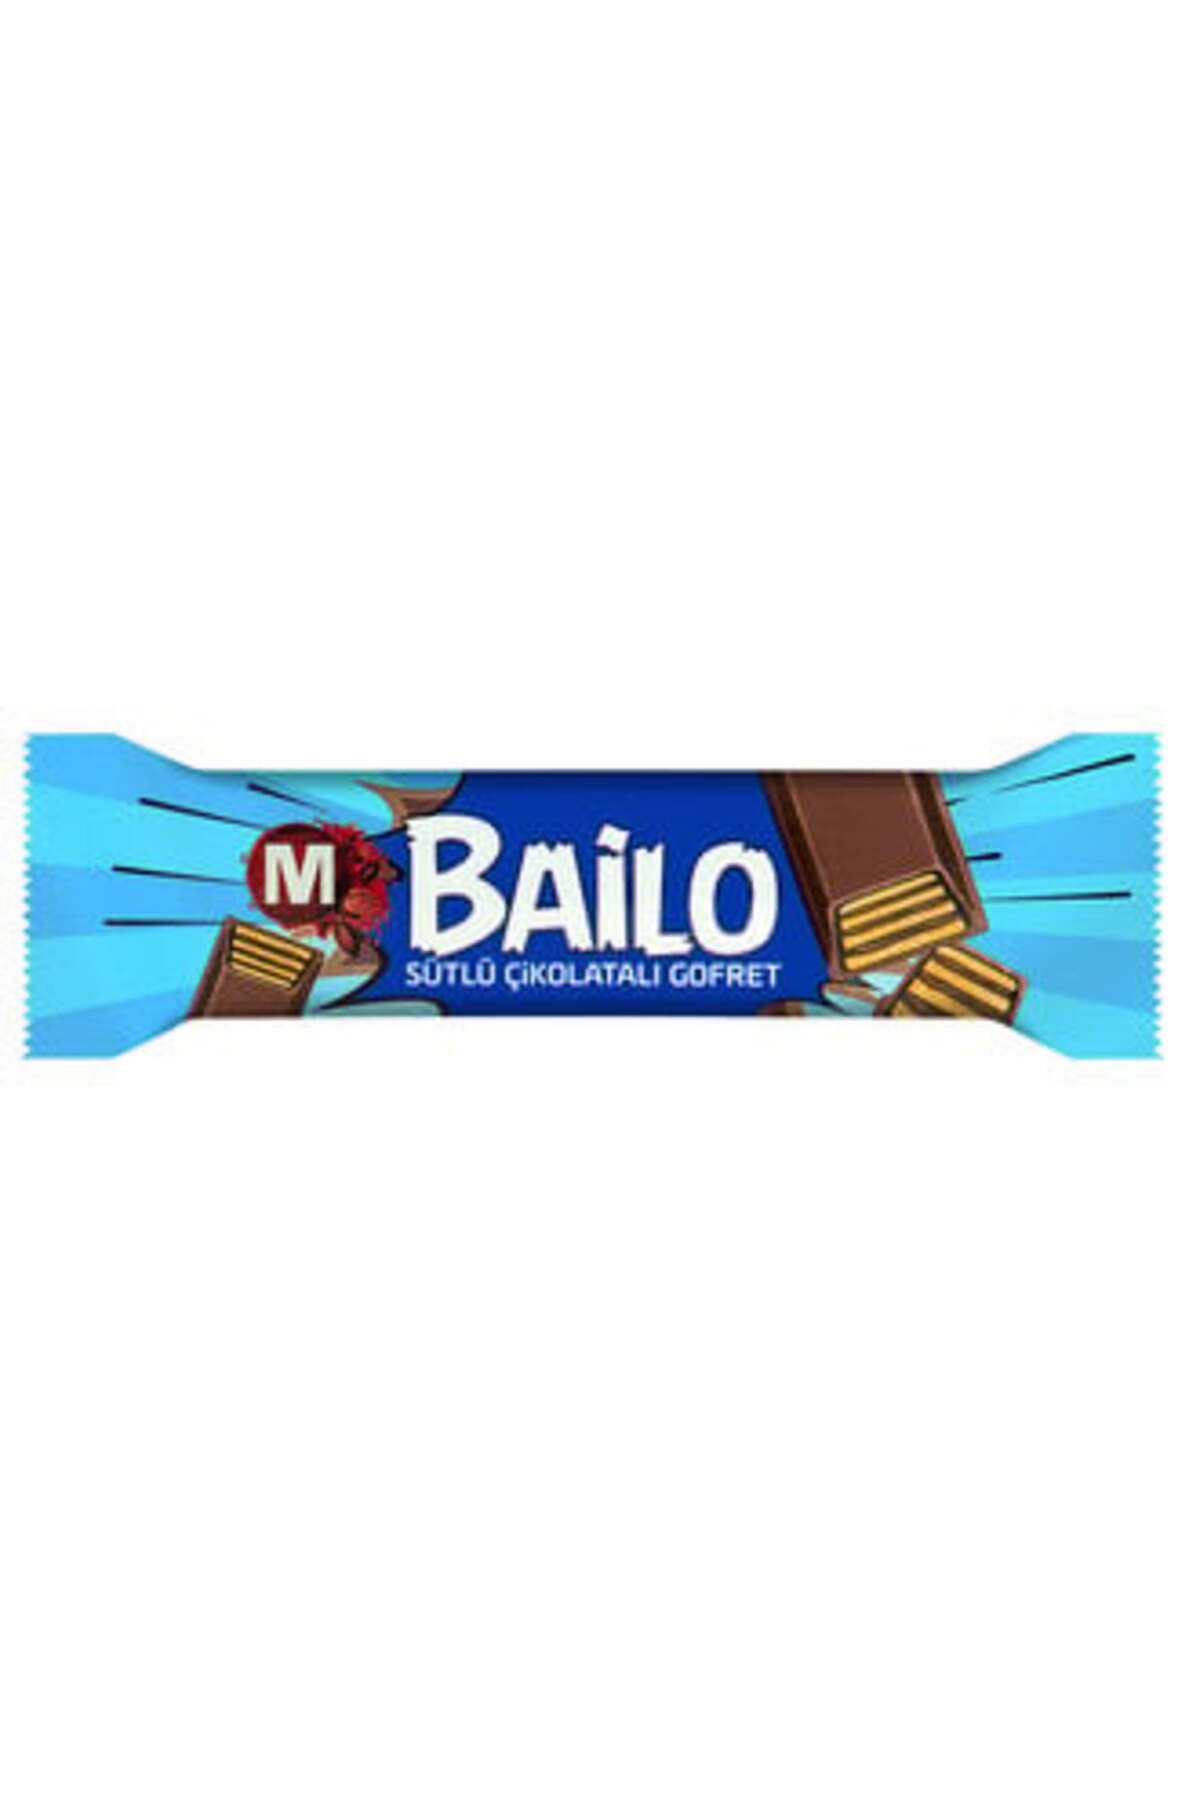 Migros Bailo Sütlü Çikolatalı Gofret 35 G ( 5 ADET )